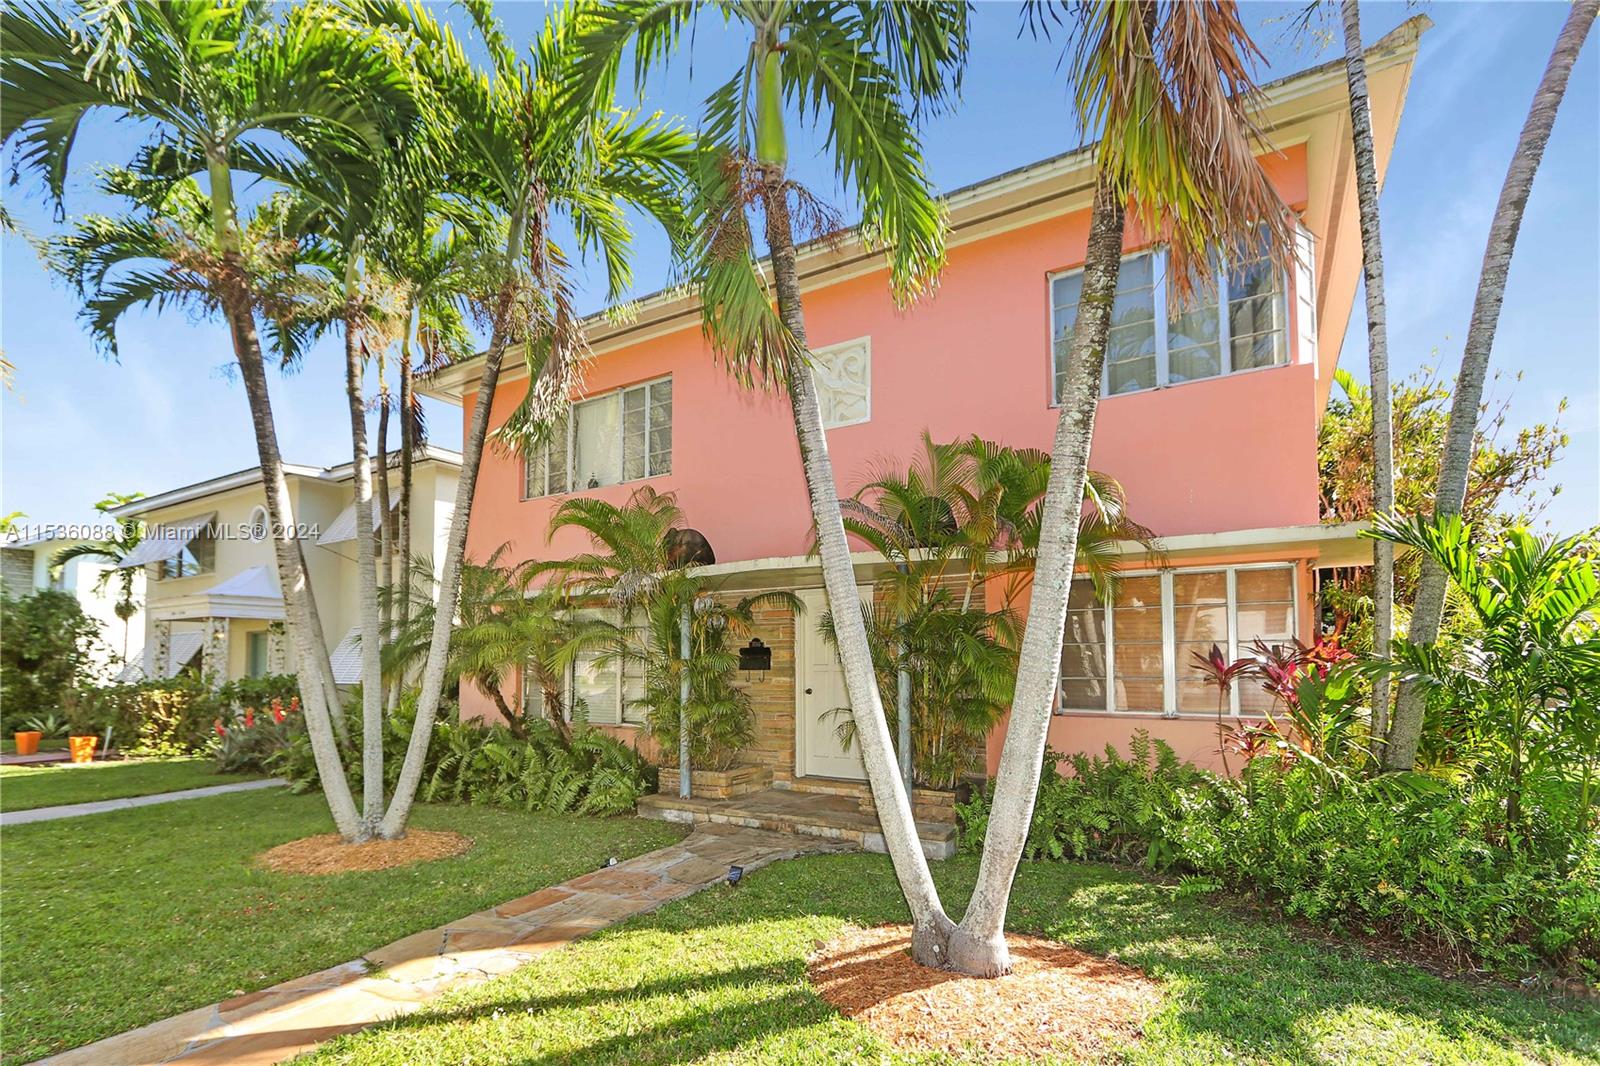 Rental Property at 3705 Ponce De Leon Blvd Blvd, Coral Gables, Broward County, Florida -  - $1,400,000 MO.